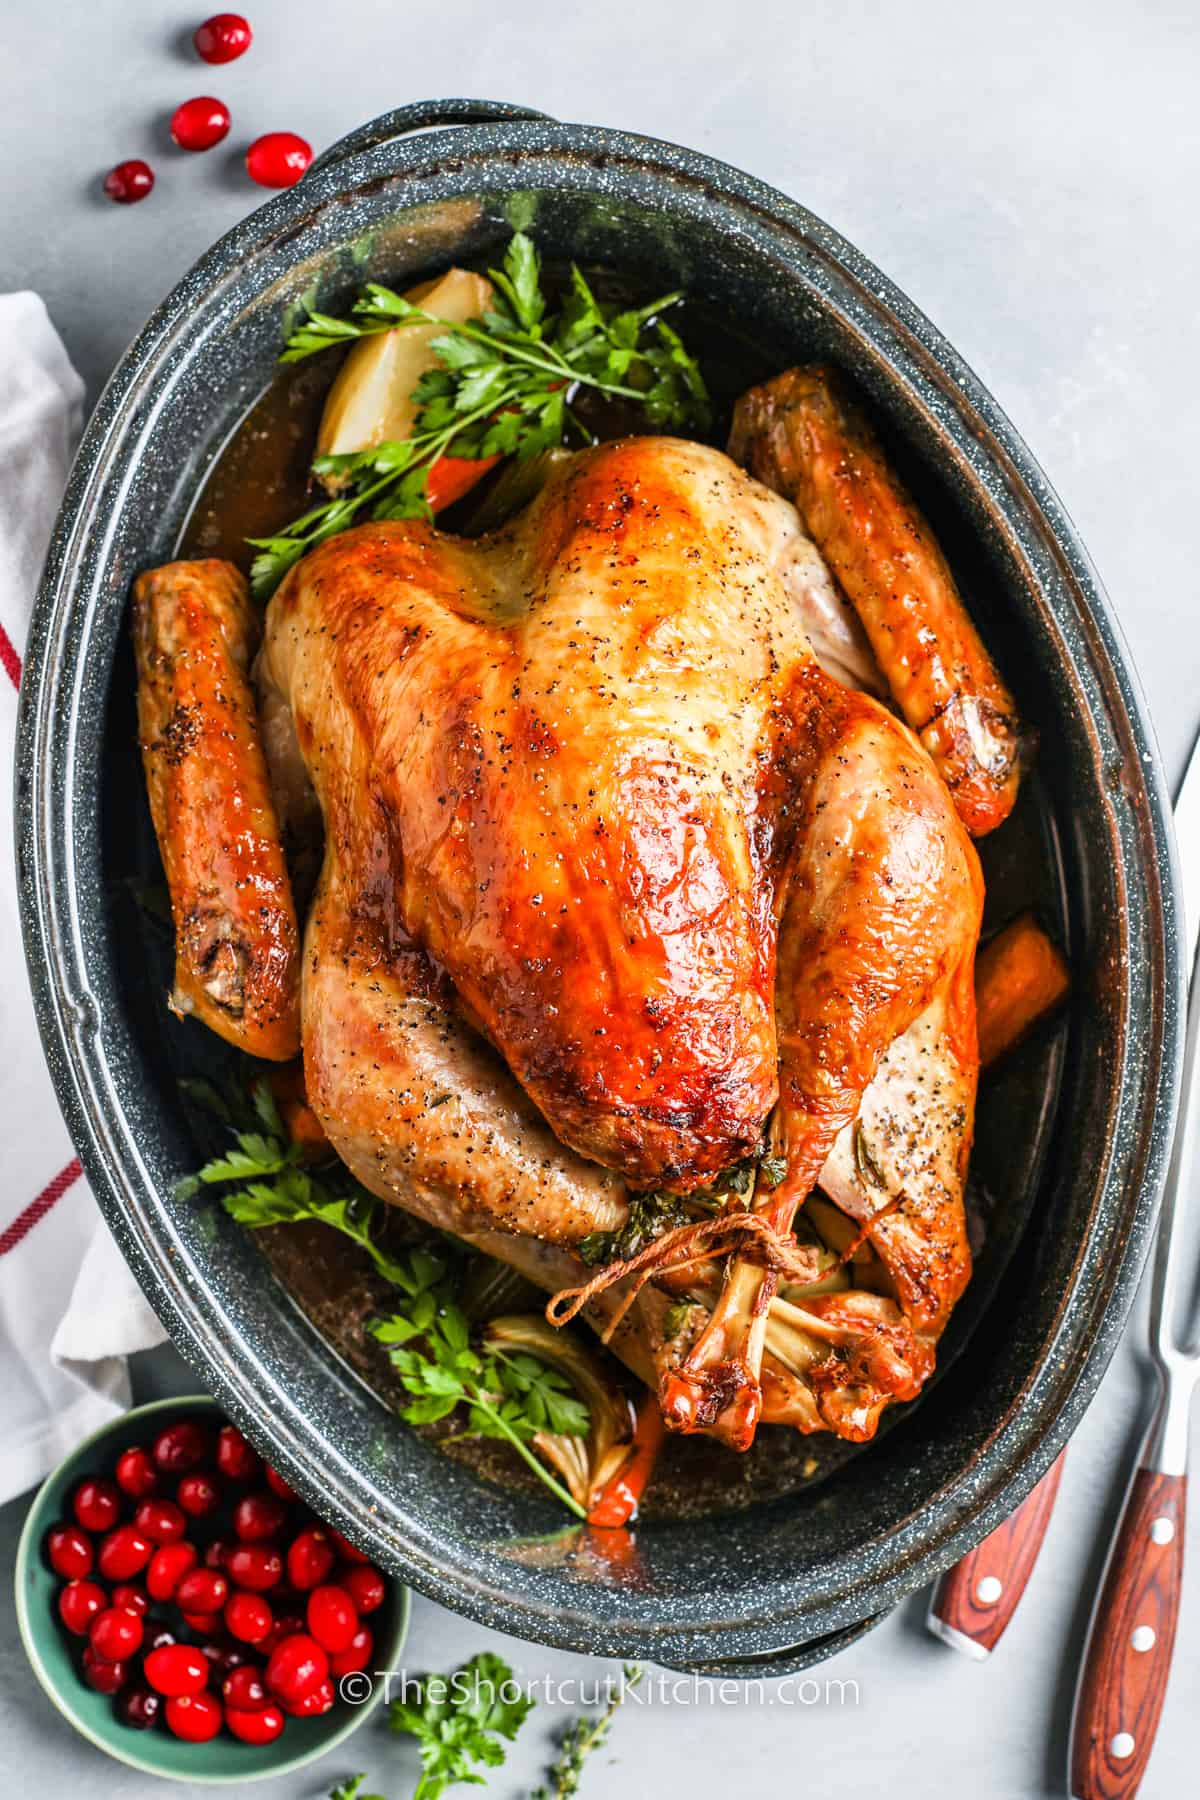 Roast Turkey in a roasting pan with fresh herbs